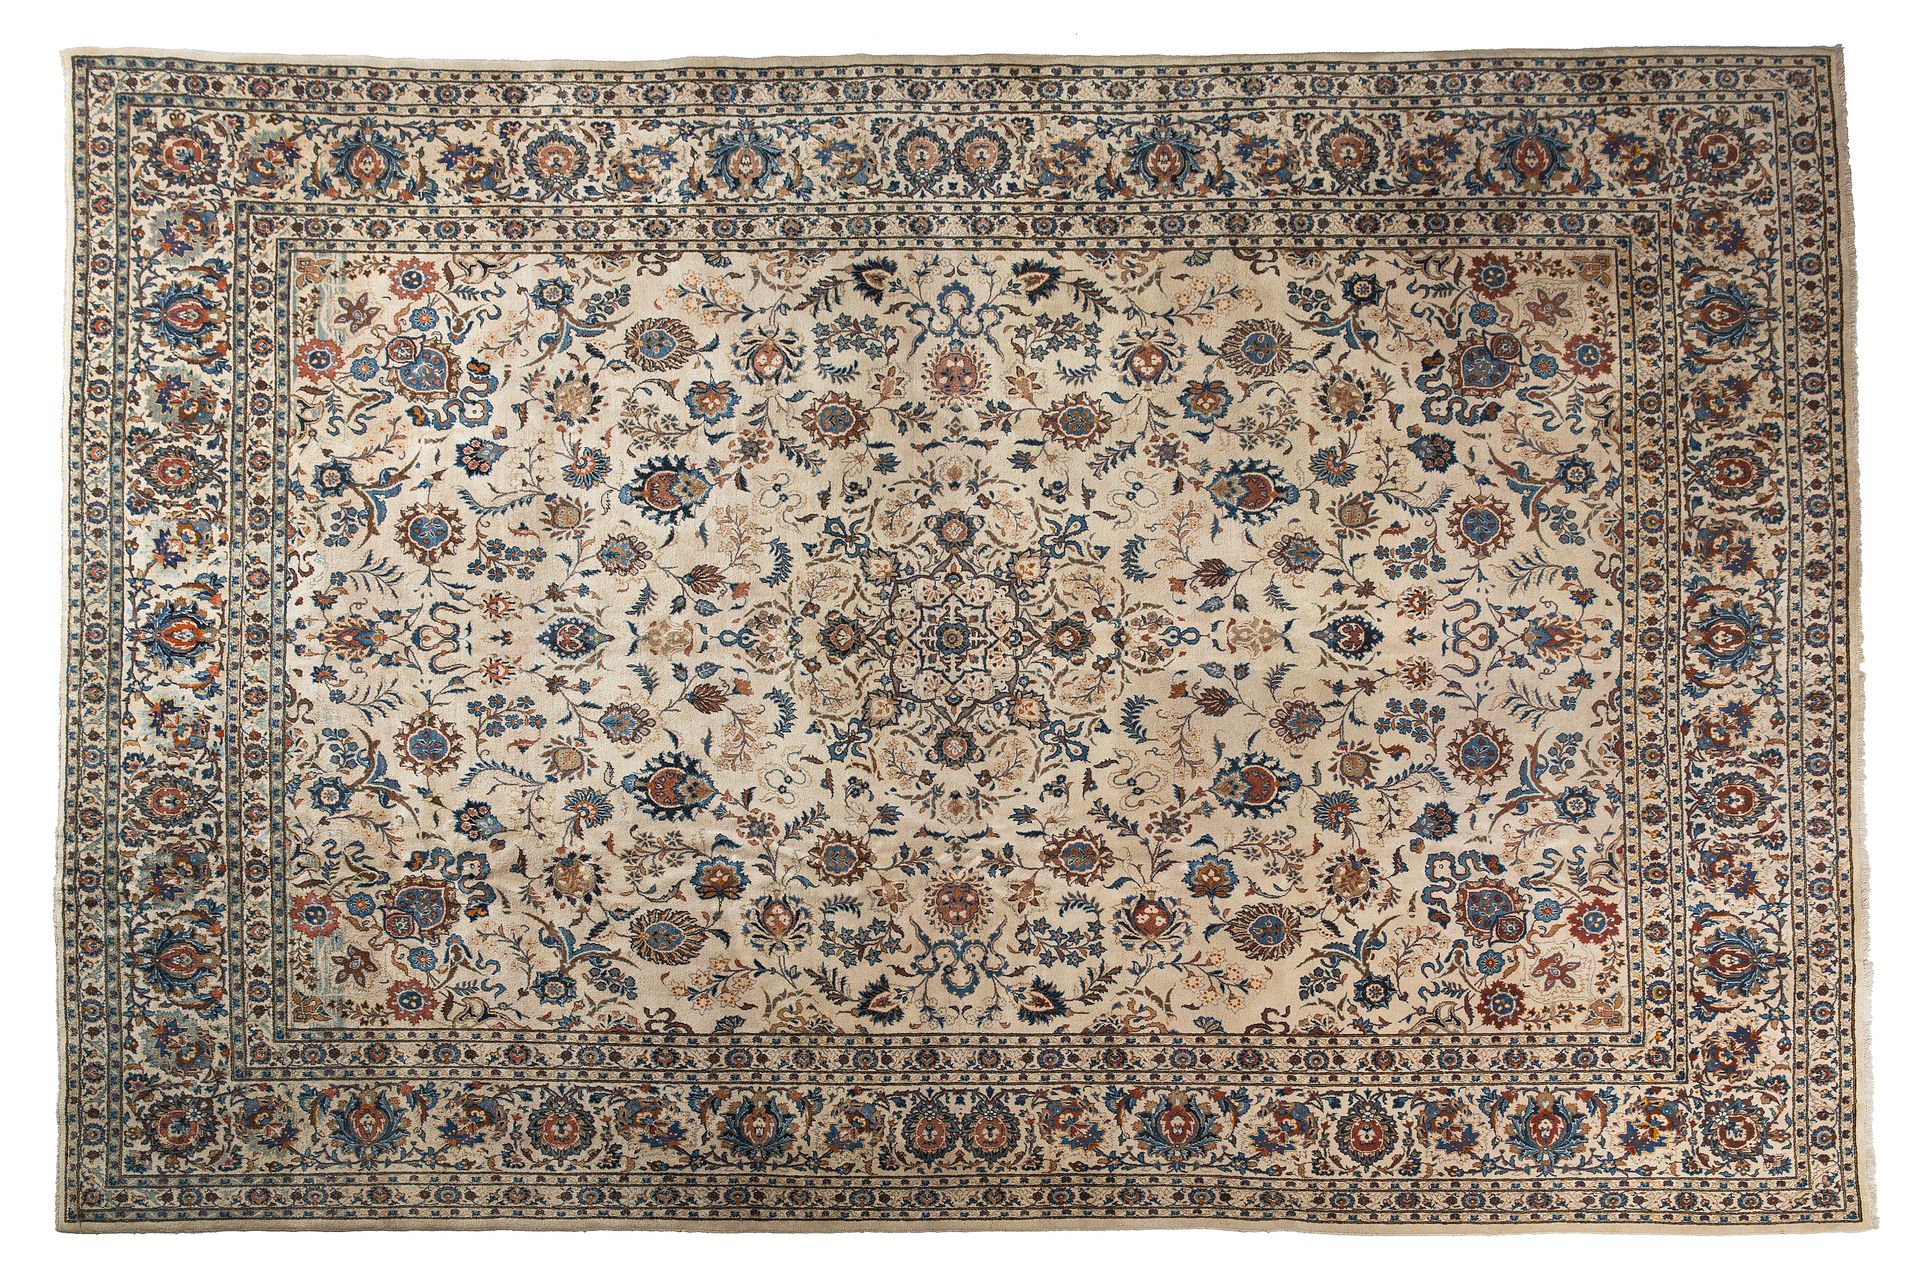 Null Importante alfombra KACHAN (Irán), mediados del siglo XX

Un campo de marfi&hellip;